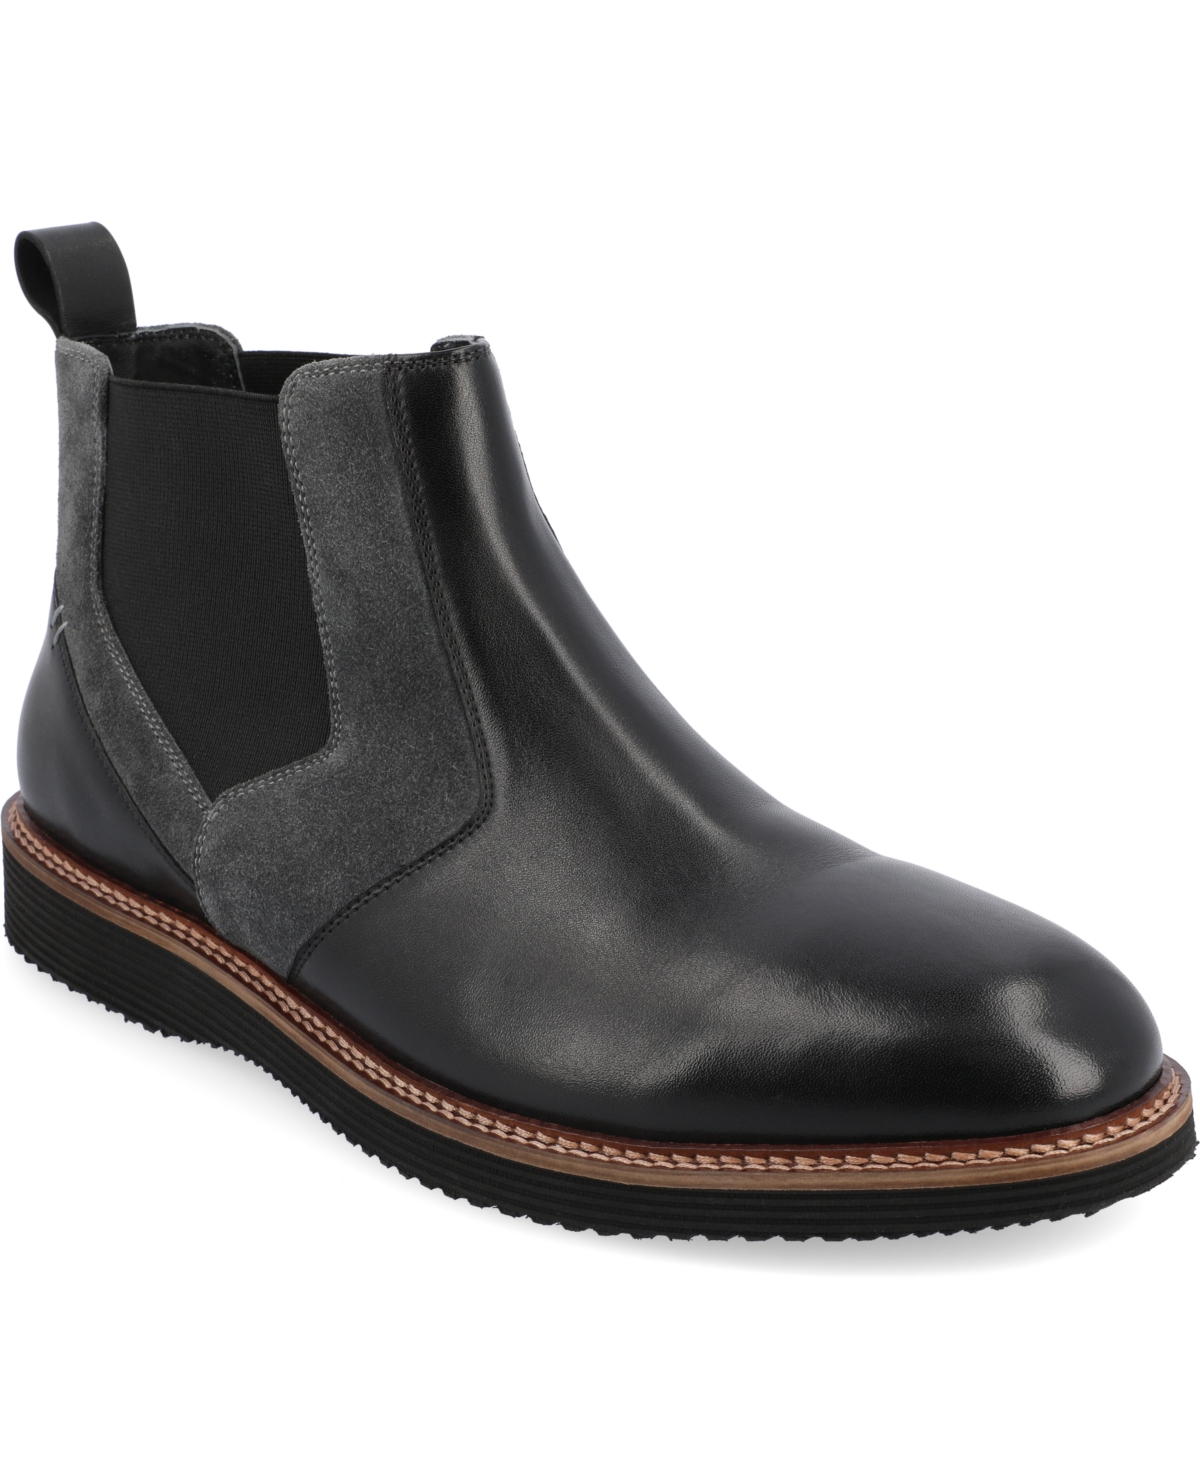 Men's Ventura Tru Comfort Foam Plain Toe Chelsea Boots - Cognac